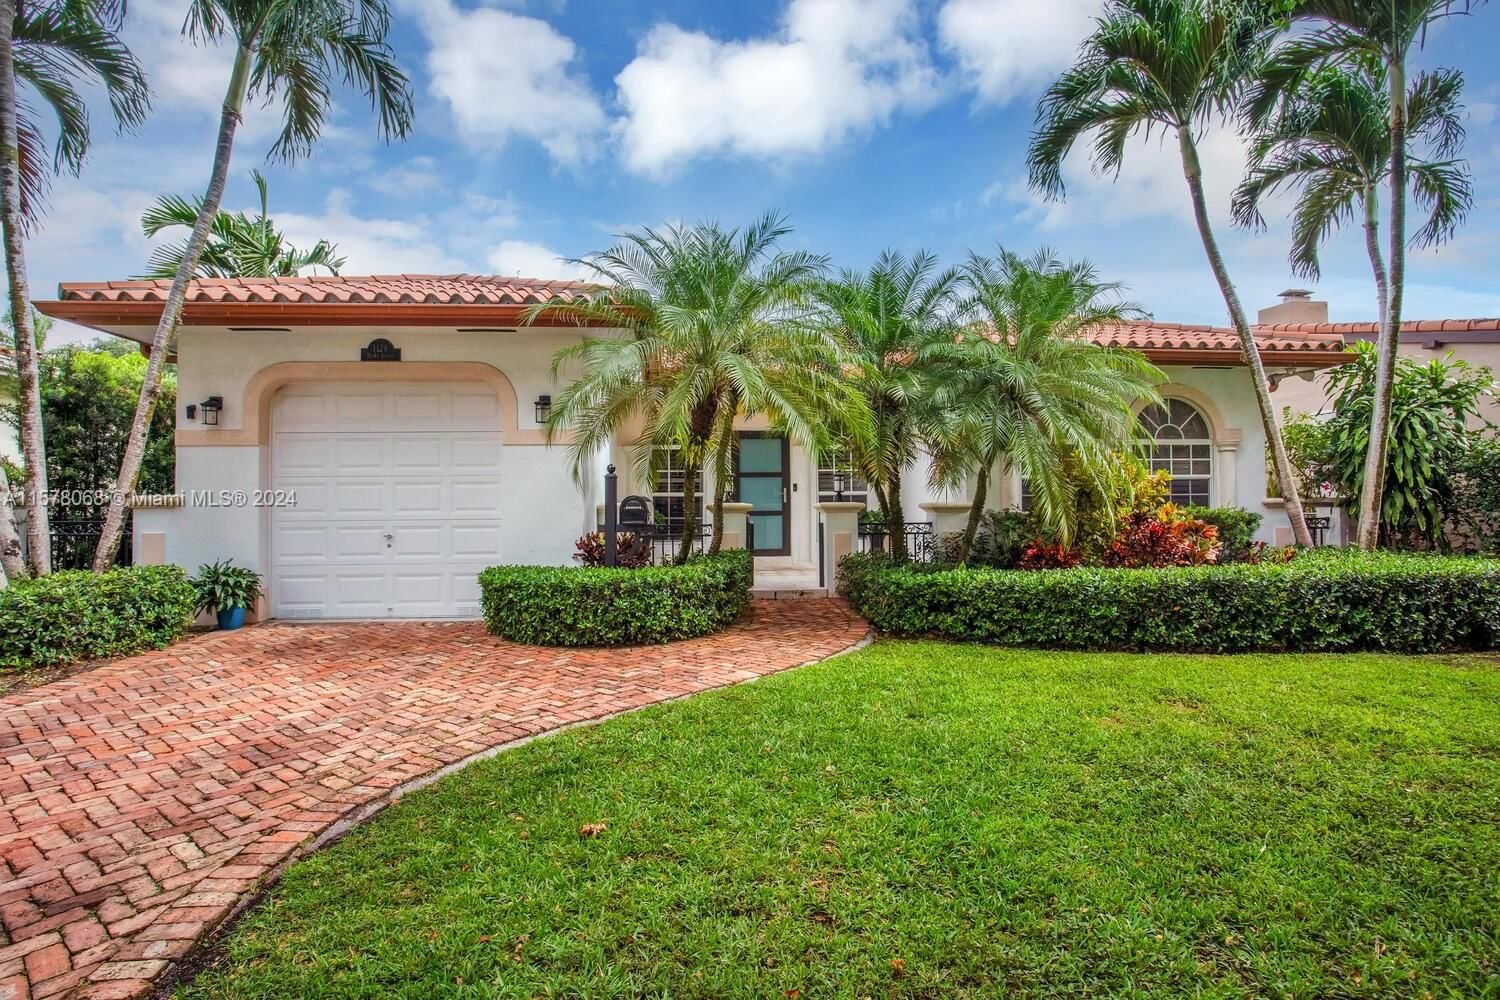 Real estate property located at 1129 Milan Ave, Miami-Dade County, CORAL GABLES GRANADA SEC, Coral Gables, FL